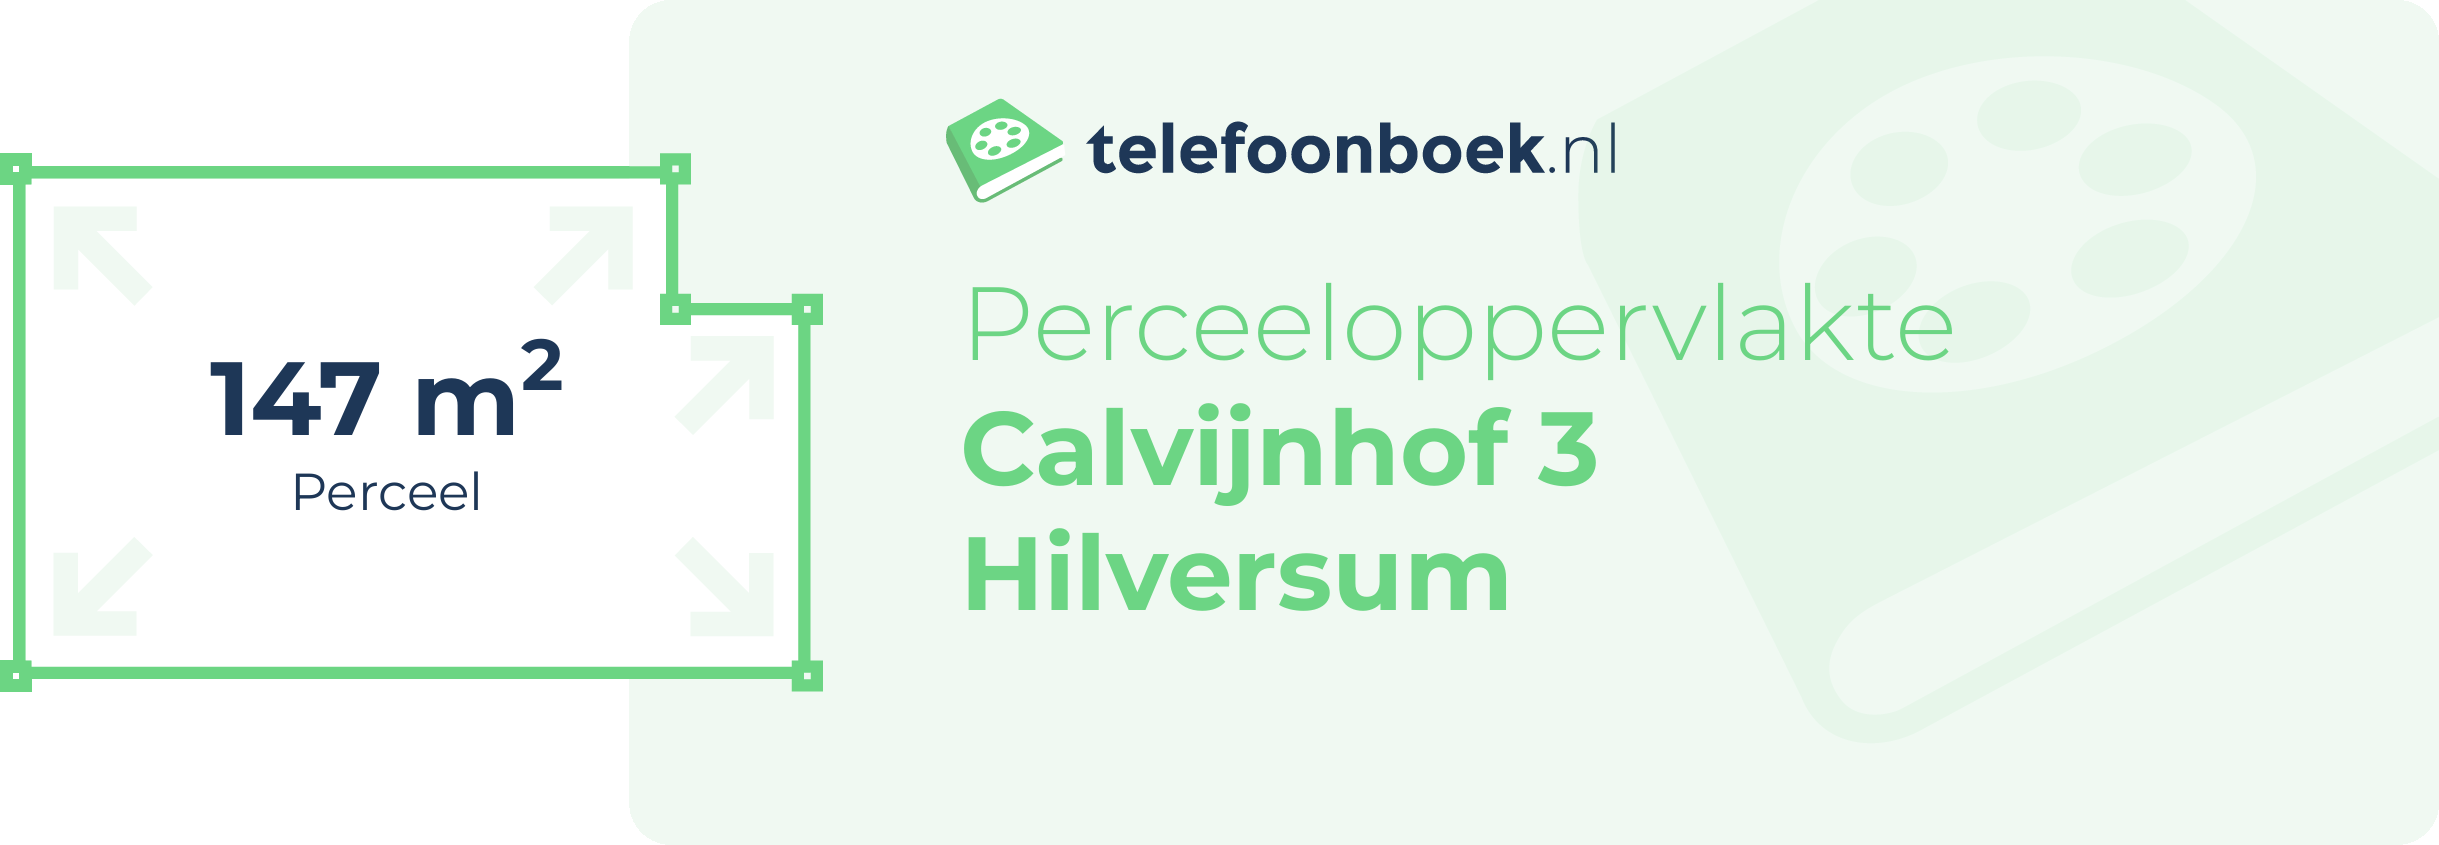 Perceeloppervlakte Calvijnhof 3 Hilversum